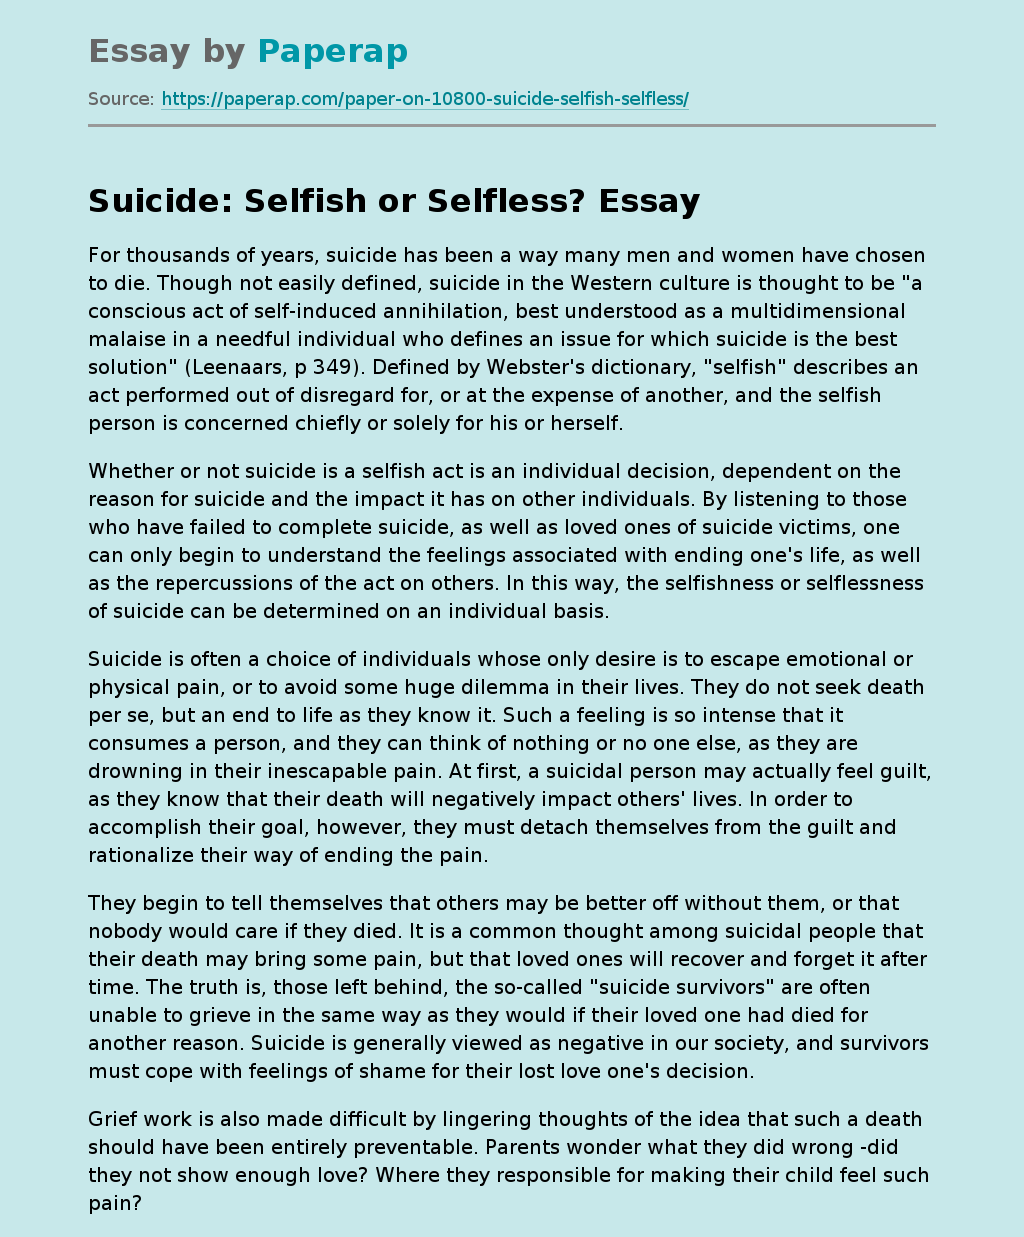 Suicide: Selfish or Selfless?